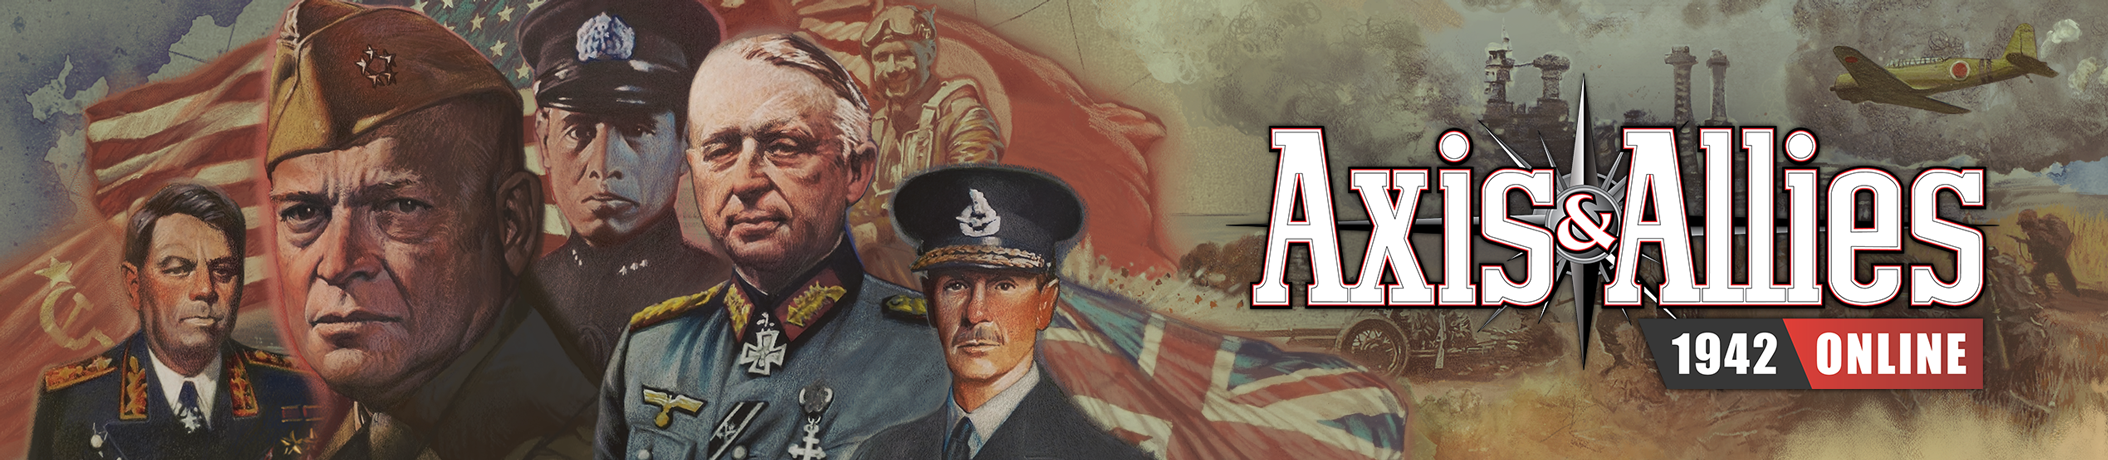 Axis & Allies 1942 Online - Trailer (2020) 